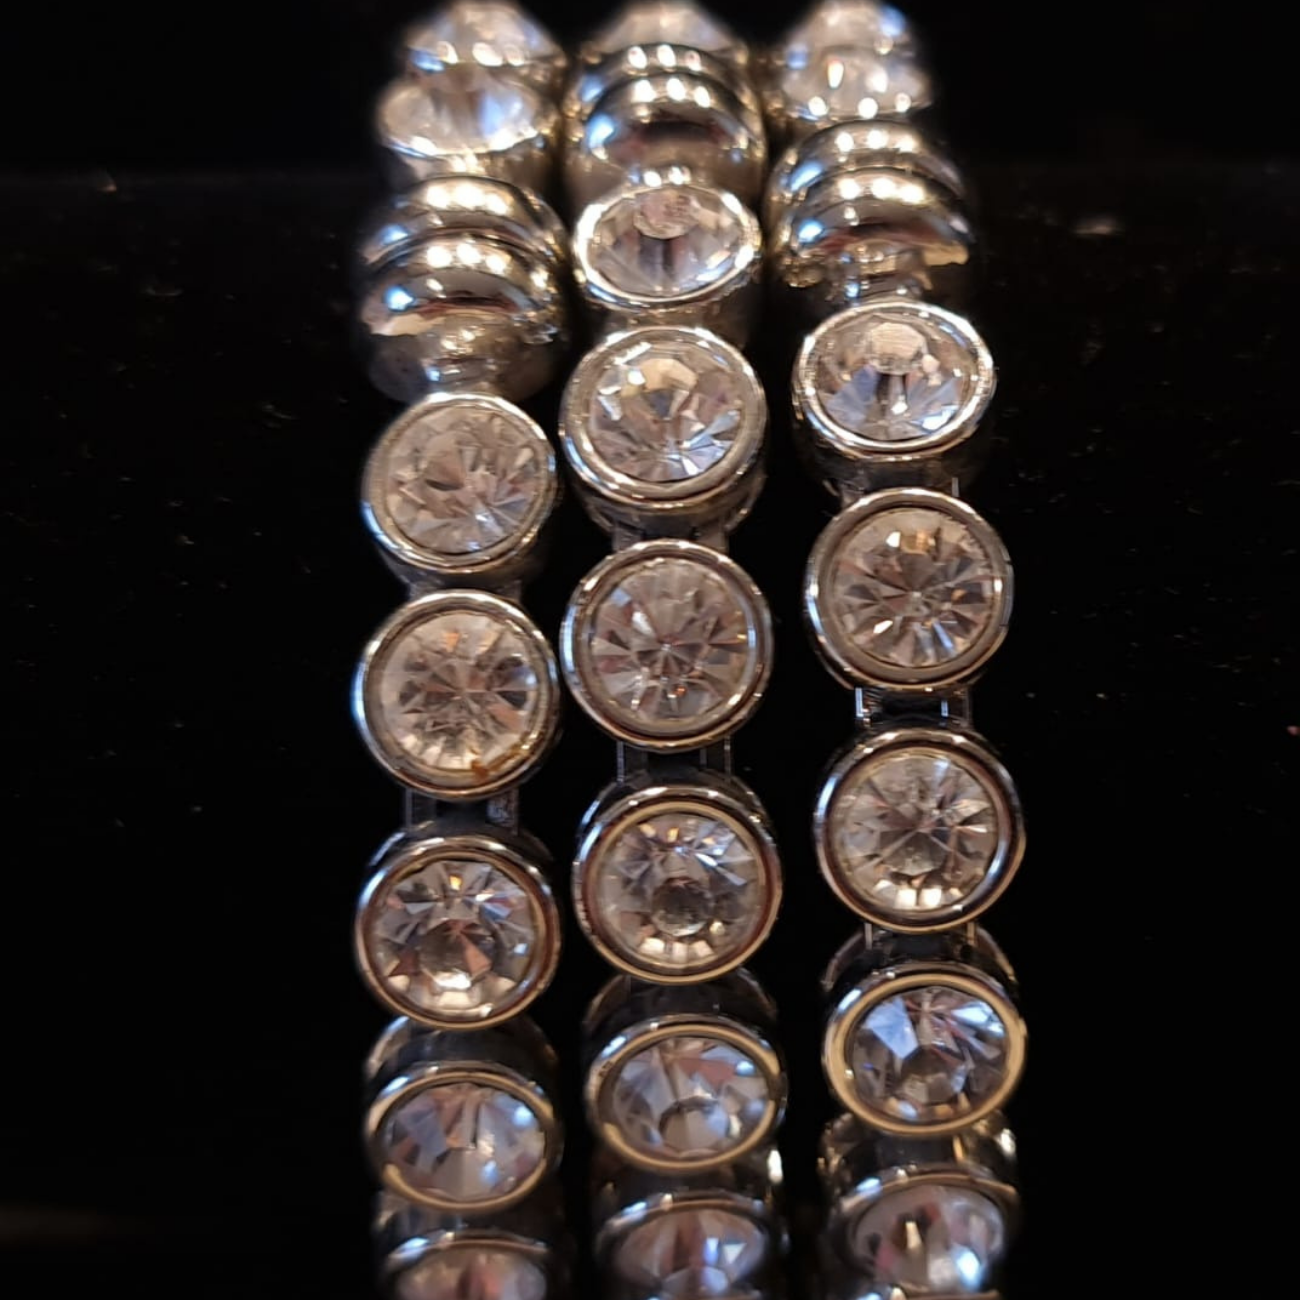 Luxurious Zinc Alloy Rhodium Plated magnetic Bracelet